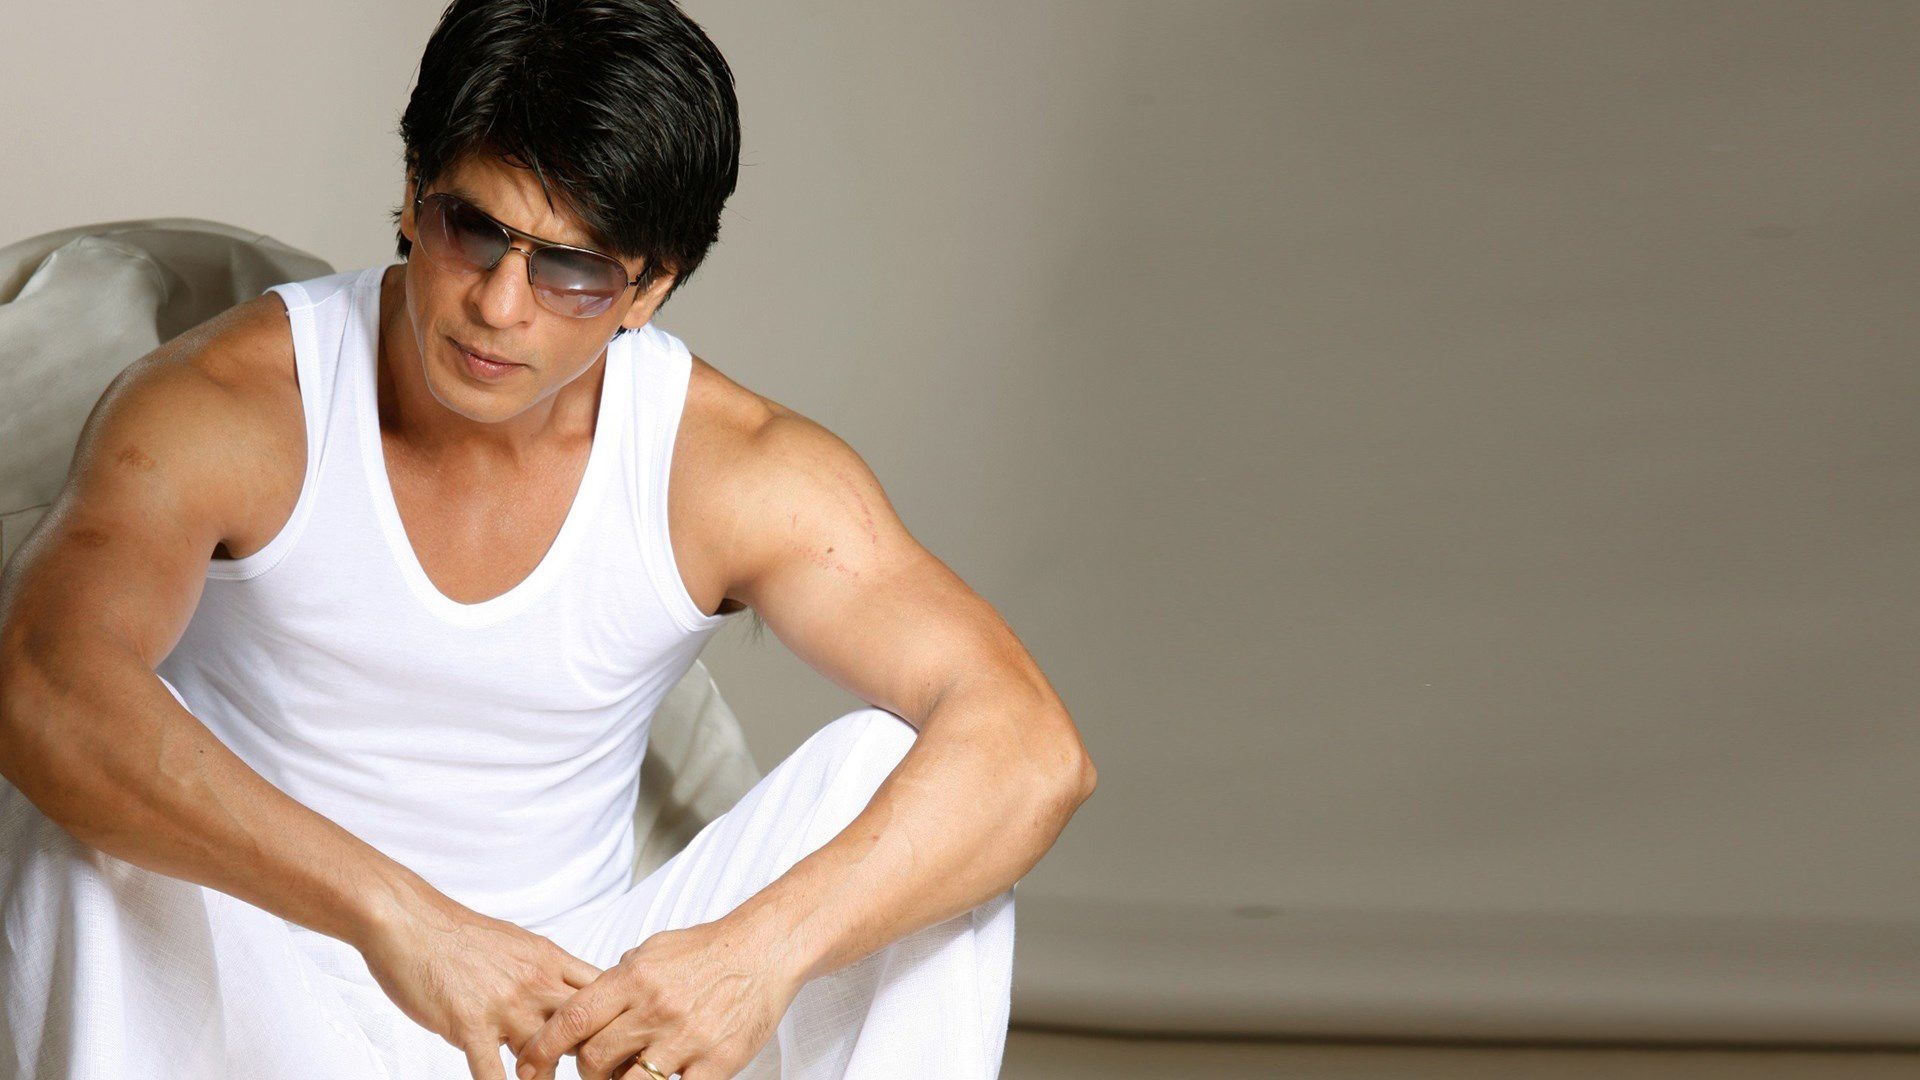 Shah Rukh Khan, Handsome wallpapers, Full HD images, 1080p, 1920x1080 Full HD Desktop